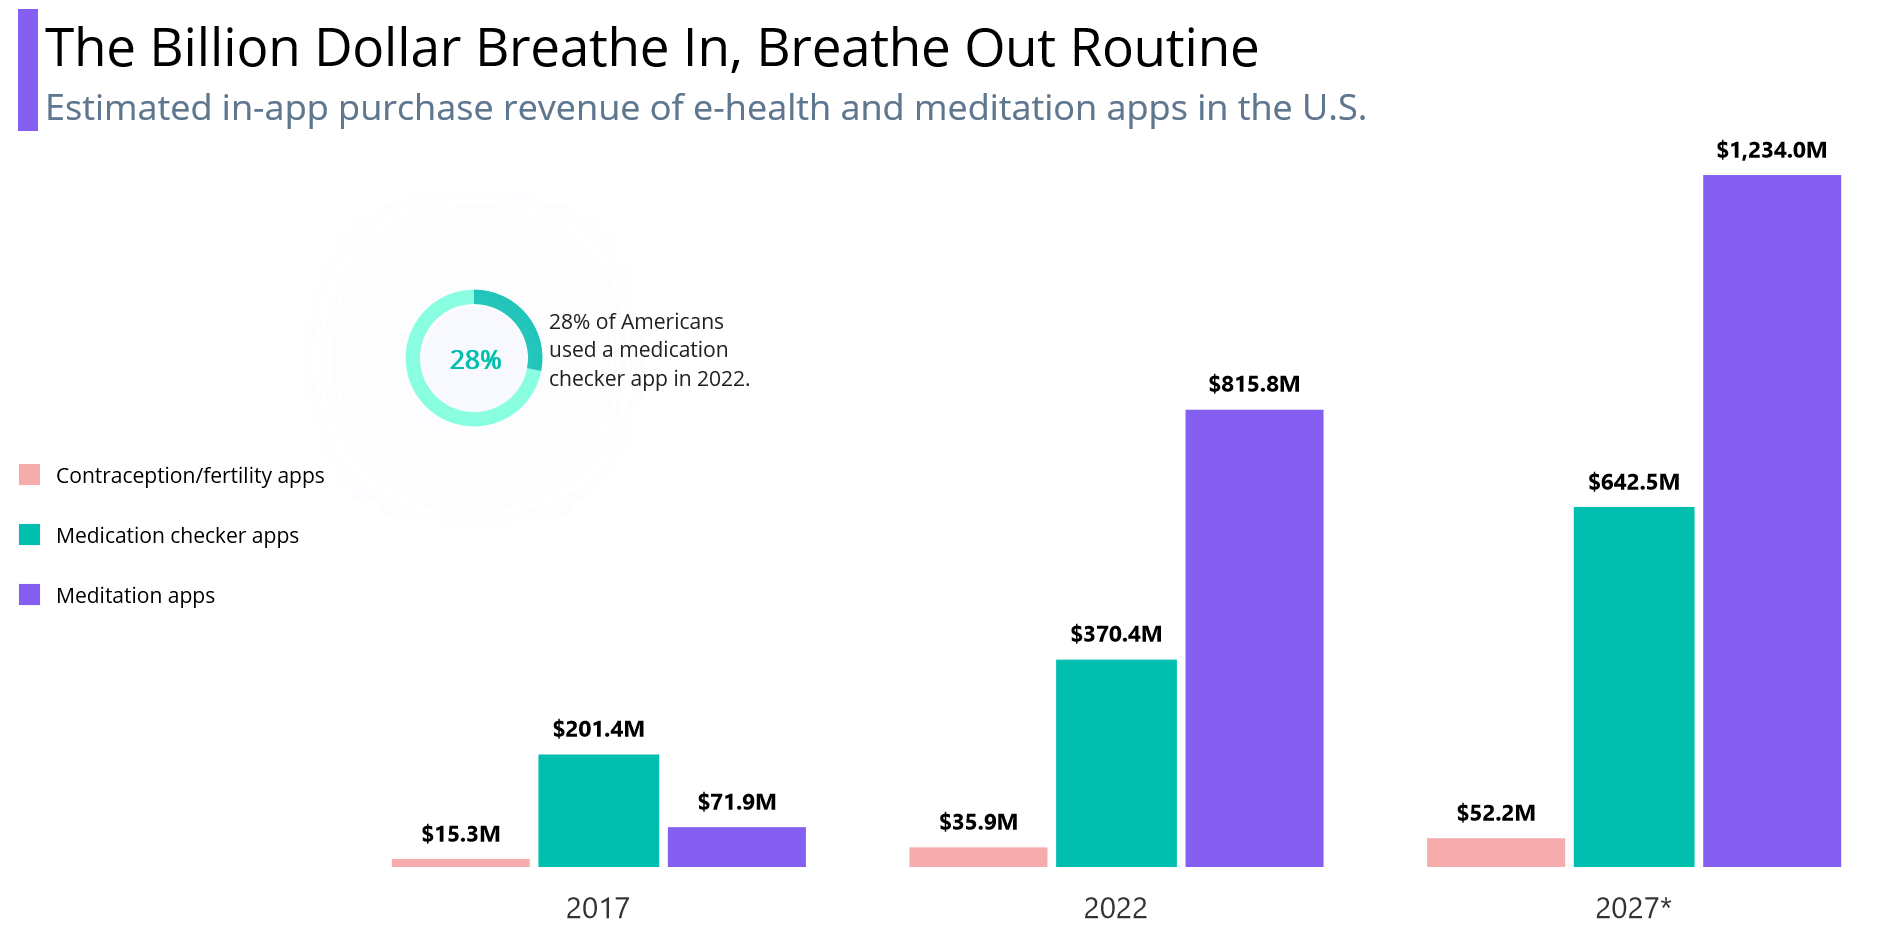 Visualizing U.S. E-Health and Meditation App Purchase Revenue Using .NET MAUI Column Chart